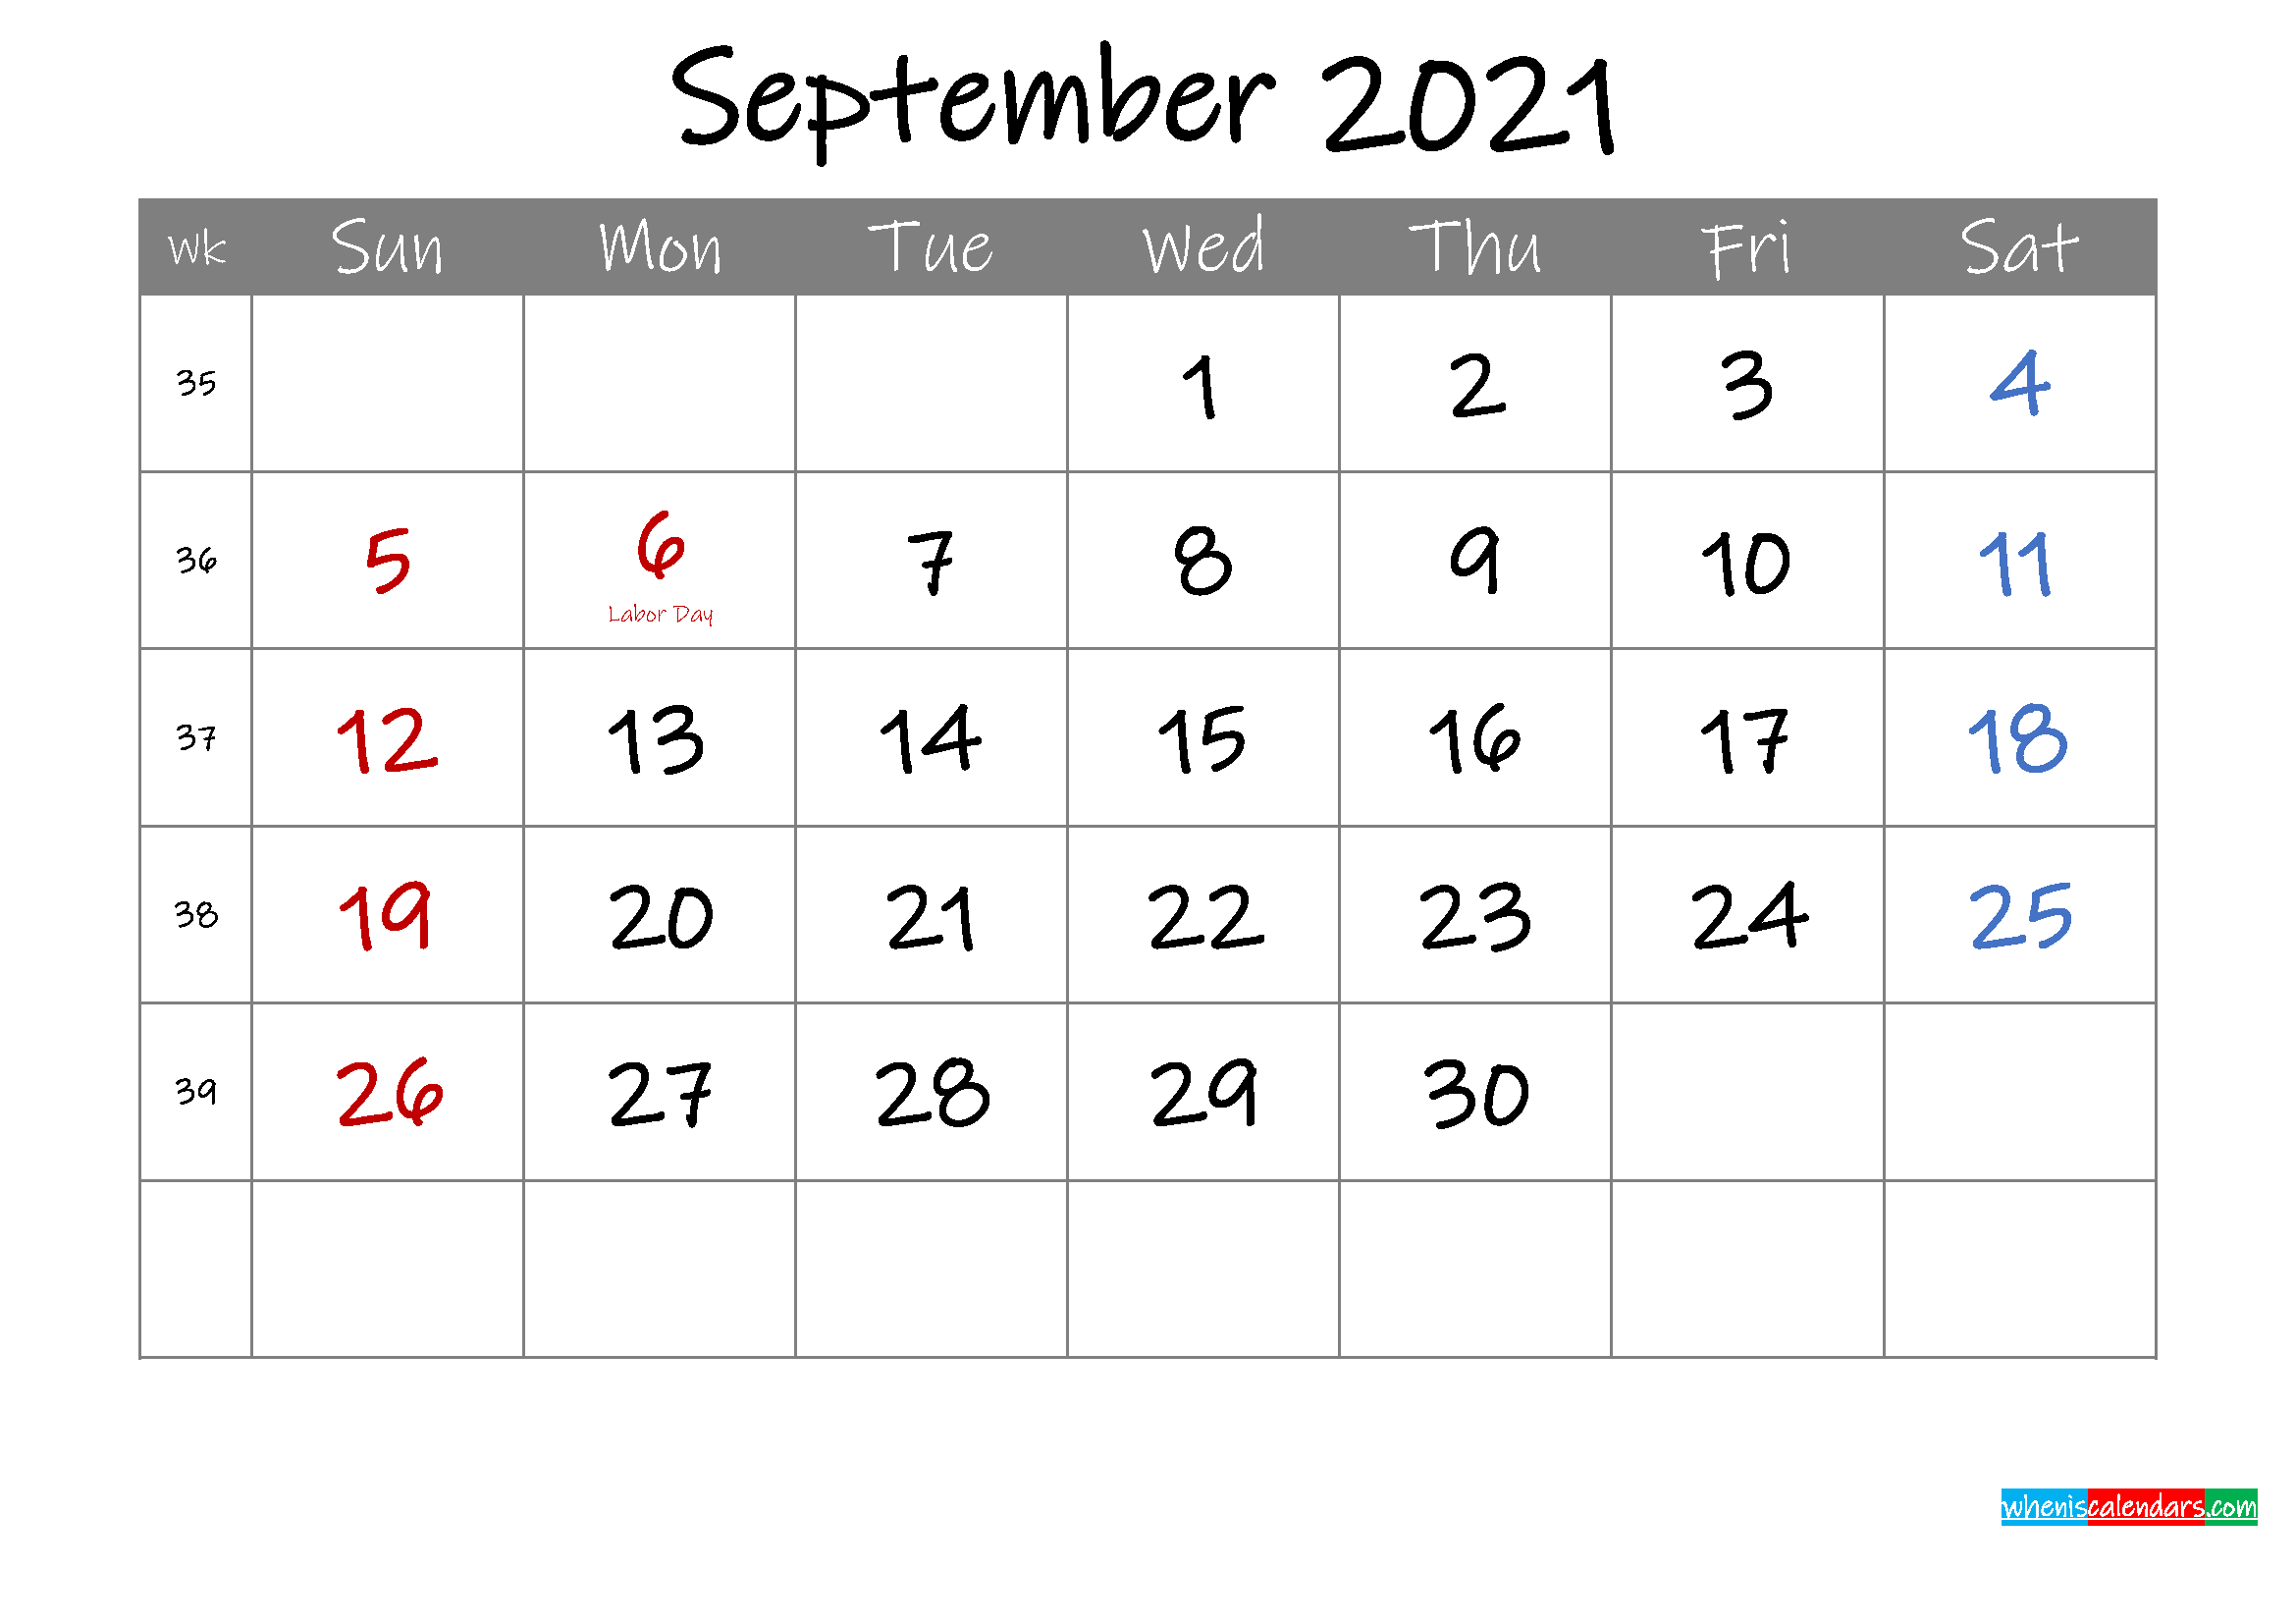 Editable September 2021 Calendar With Holidays Template Ink21m9